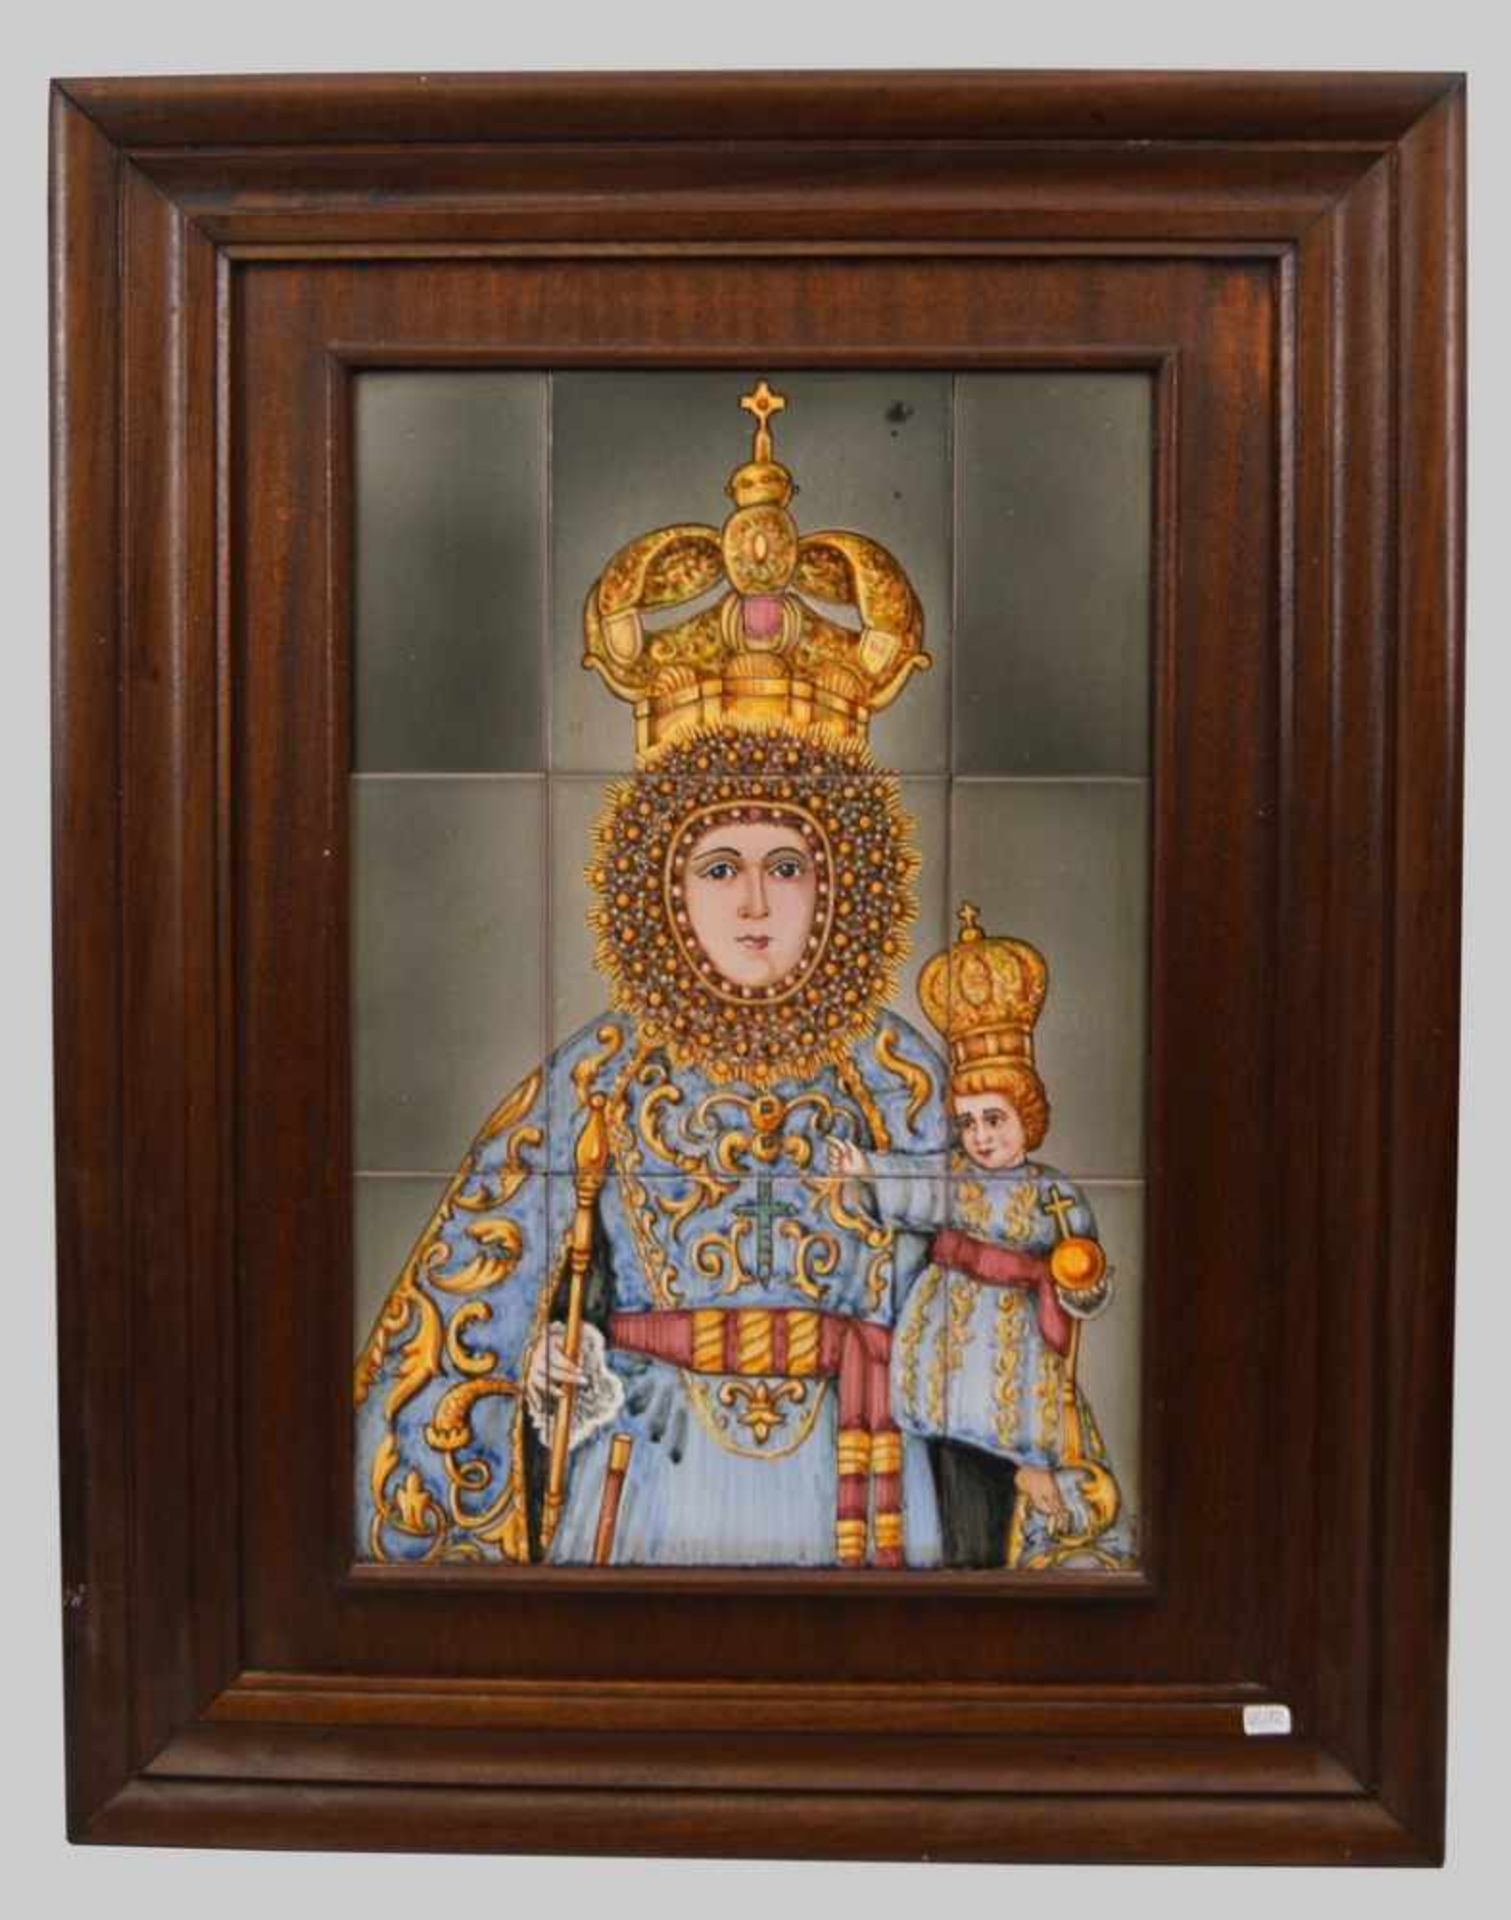 Kachelbild Mutter Gottes mit Kind, neun Kacheln, blau und bunt bemalt, u.r.sign., 31 X 46 cm,